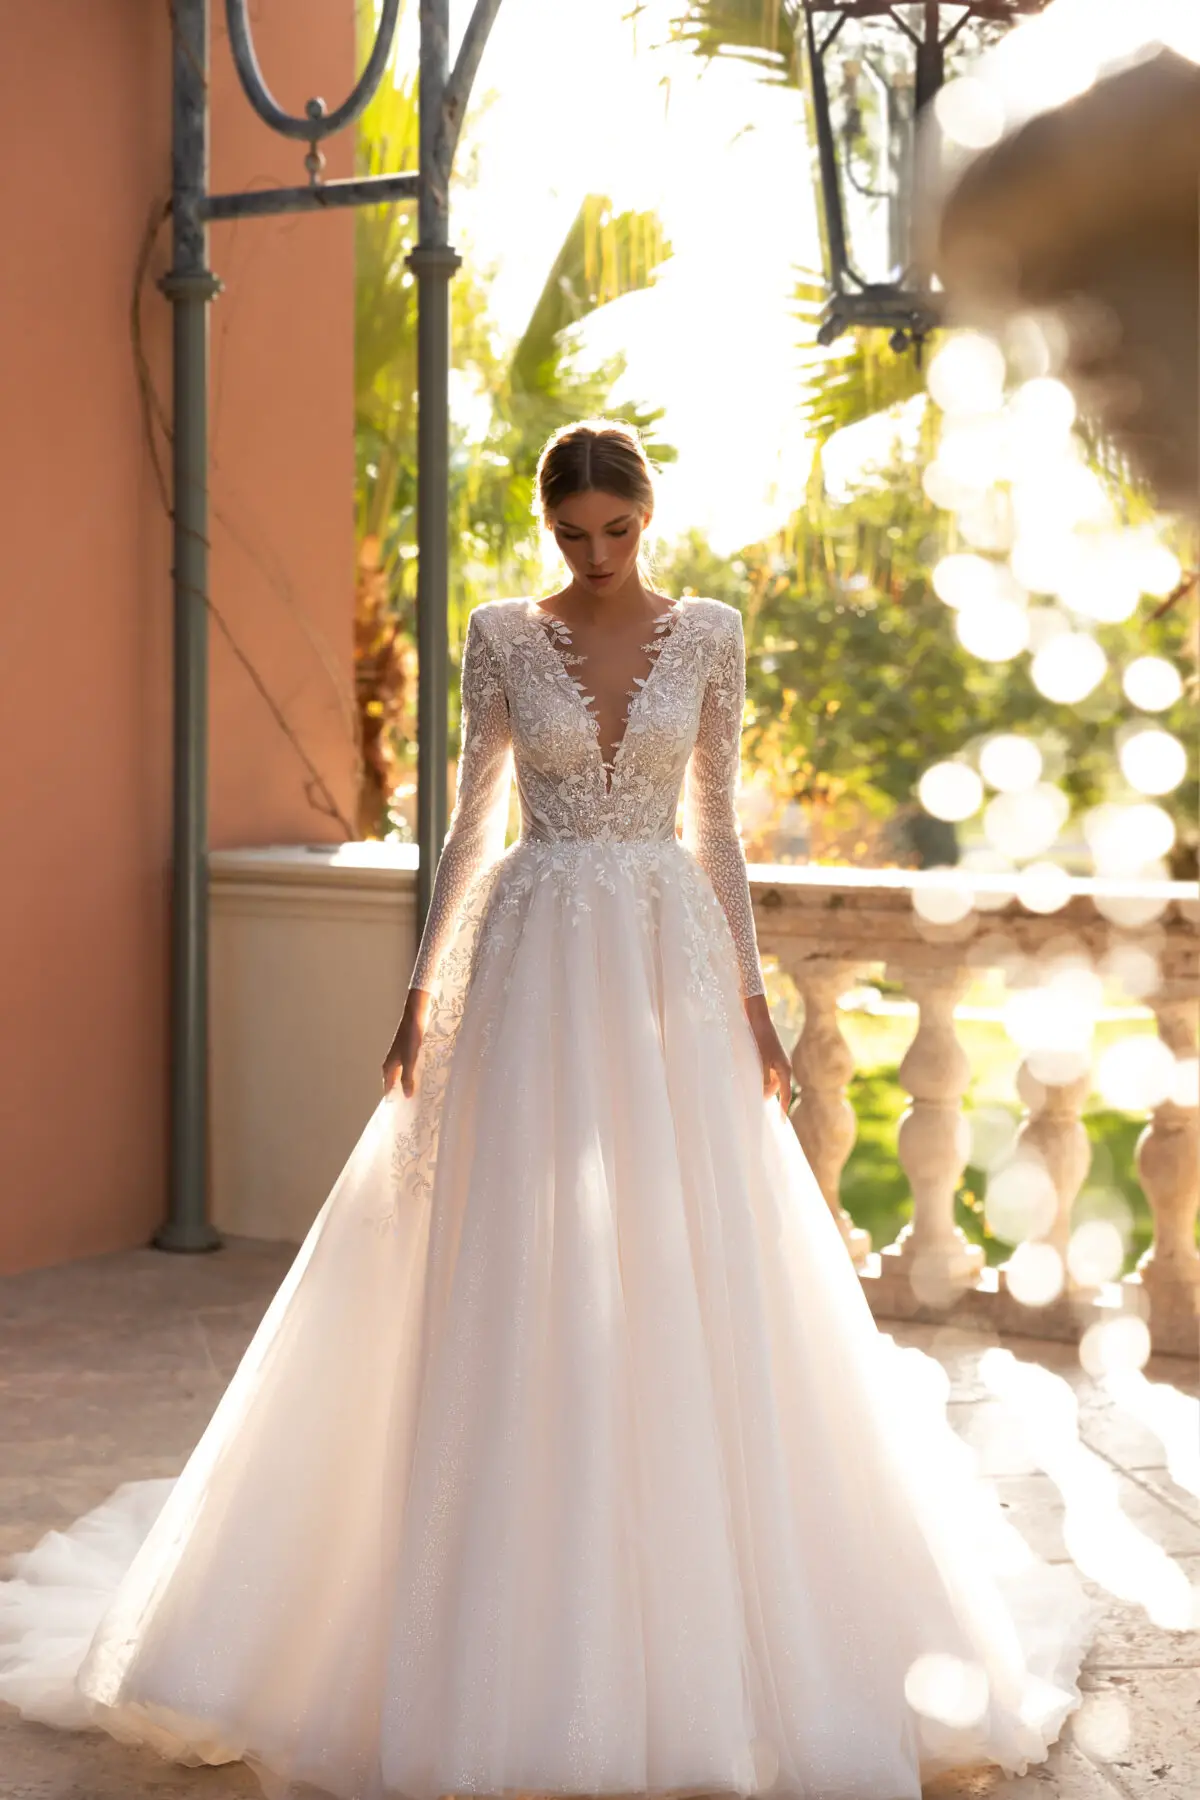 Puente by Armonia wedding dress